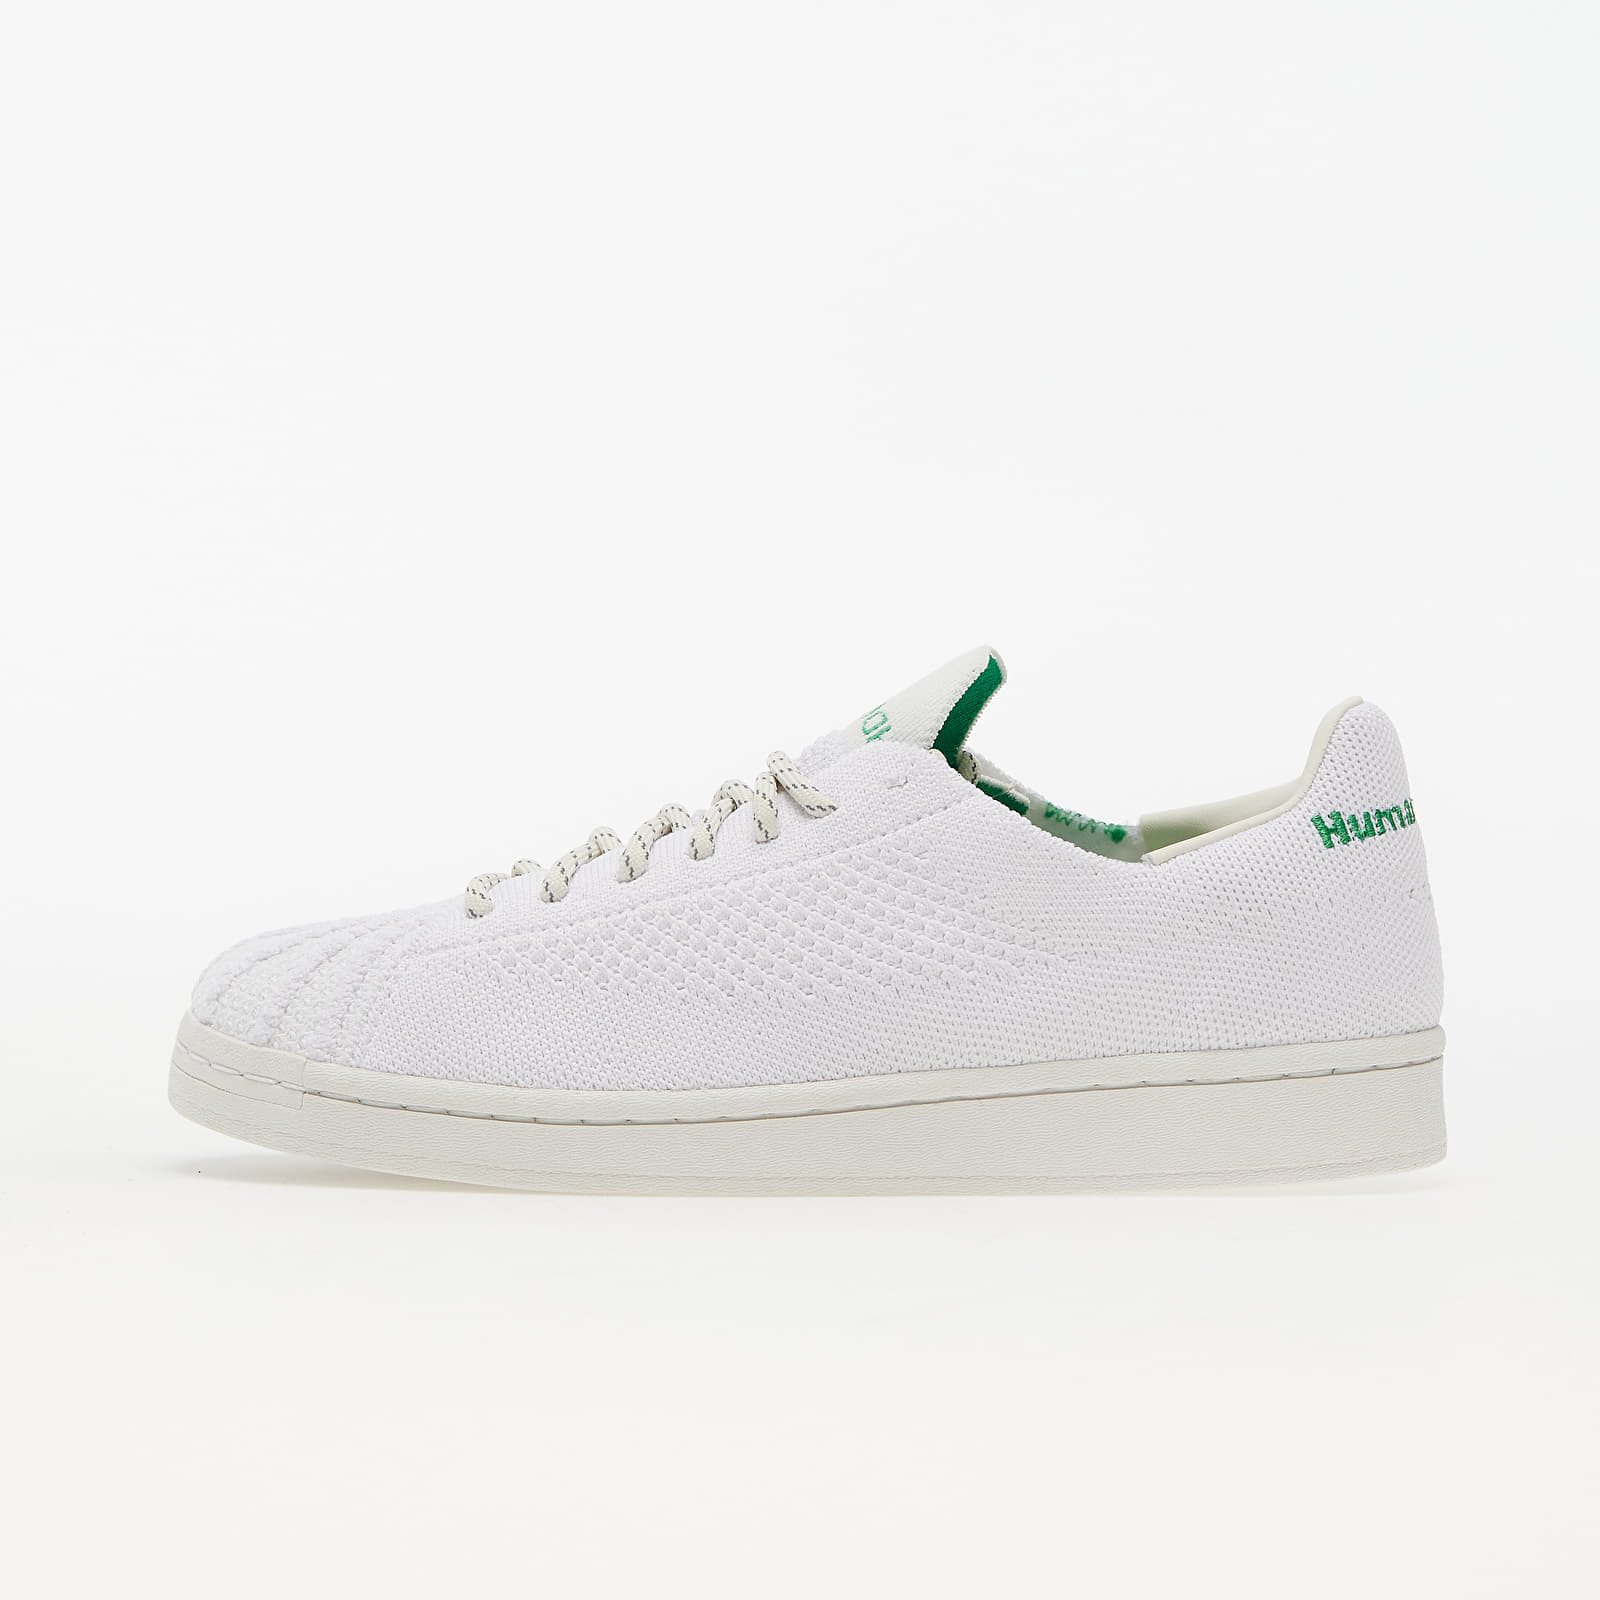 Chaussures et baskets homme adidas x Pharrell Williams Superstar Primeknit Core White/ Core White/ Vivid Green